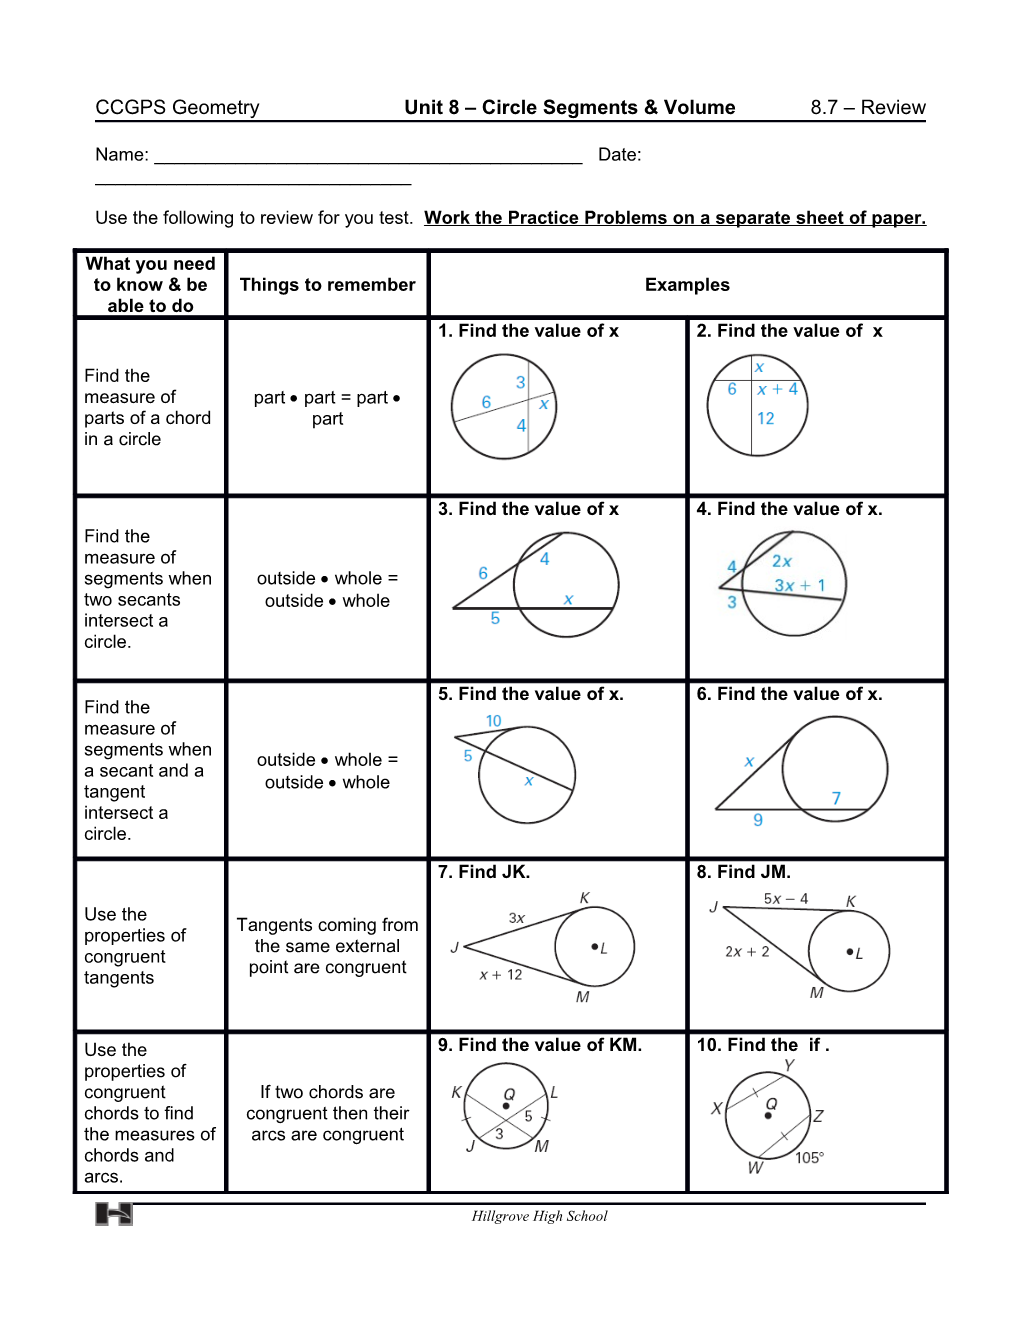 CCGPS Geometry Unit 8 Circle Segments & Volume 8.7 Review